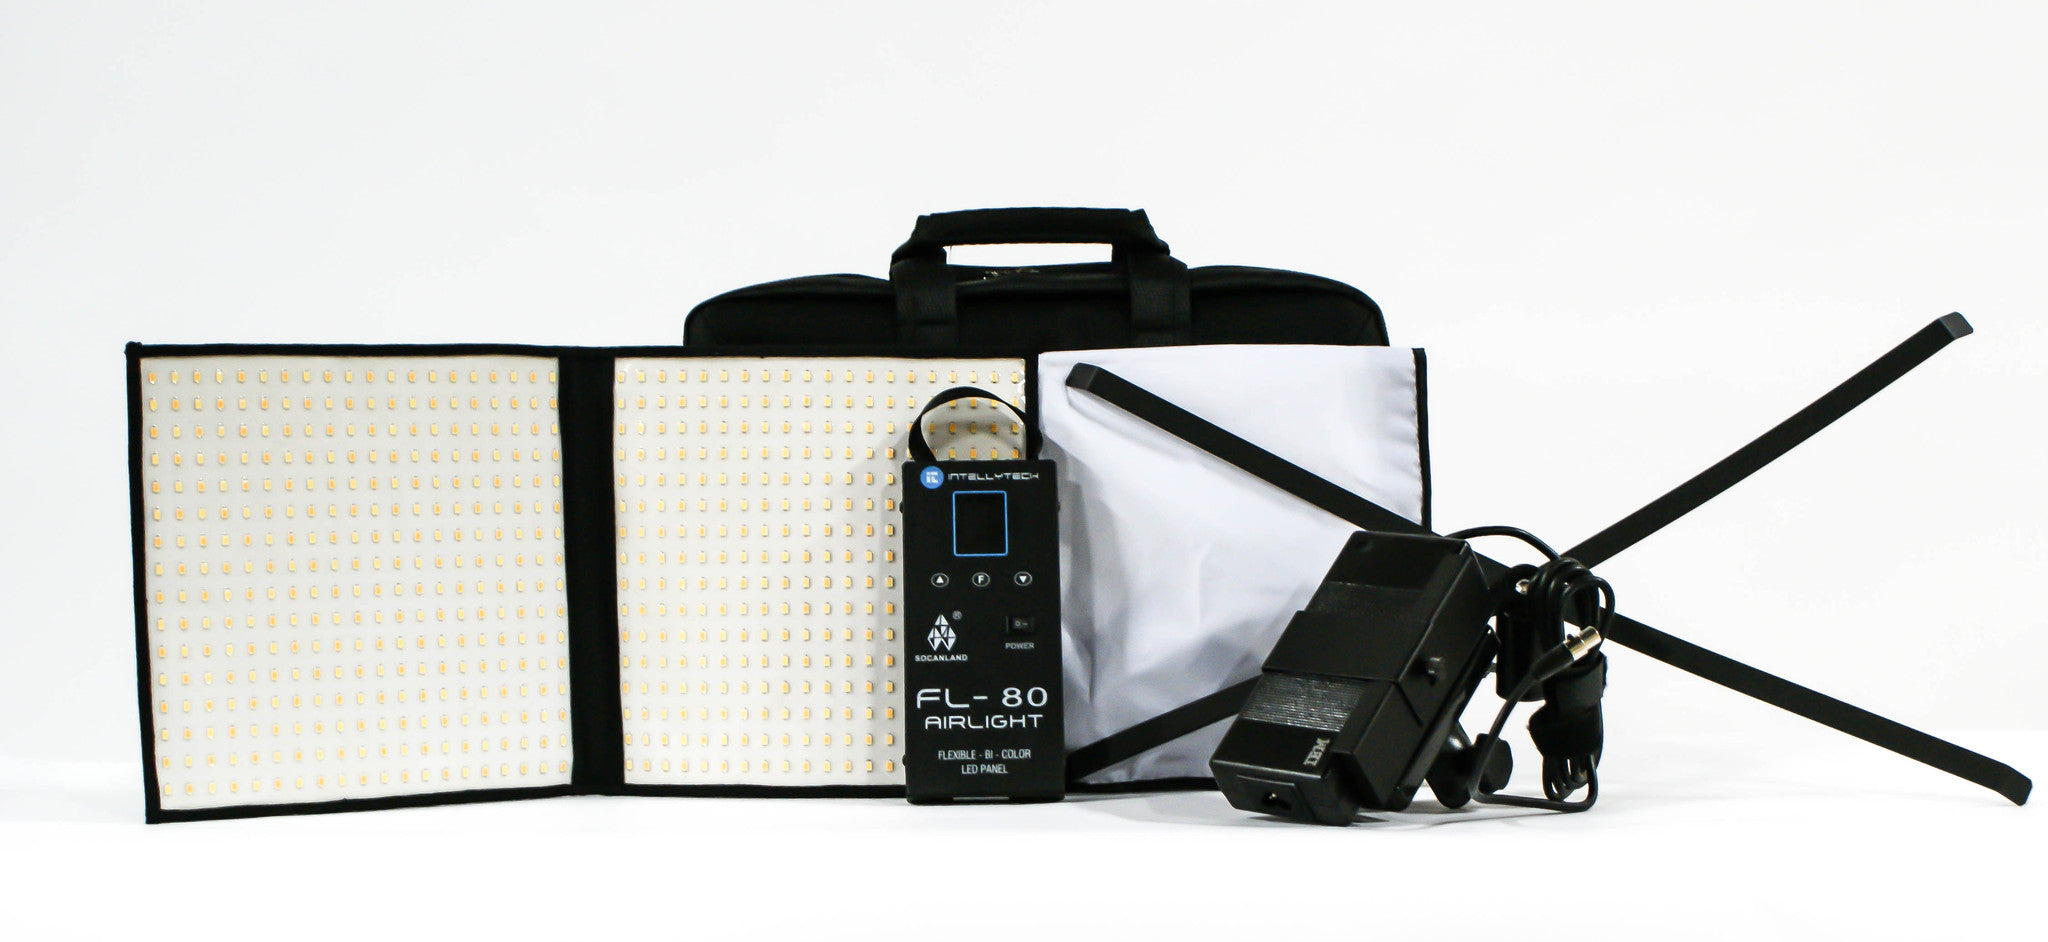 FL-80 AIRLIGHT KIT- Foldable LED Light Mat. 10"x20" Panel, Bi-Color with Full Kit (Socanland)